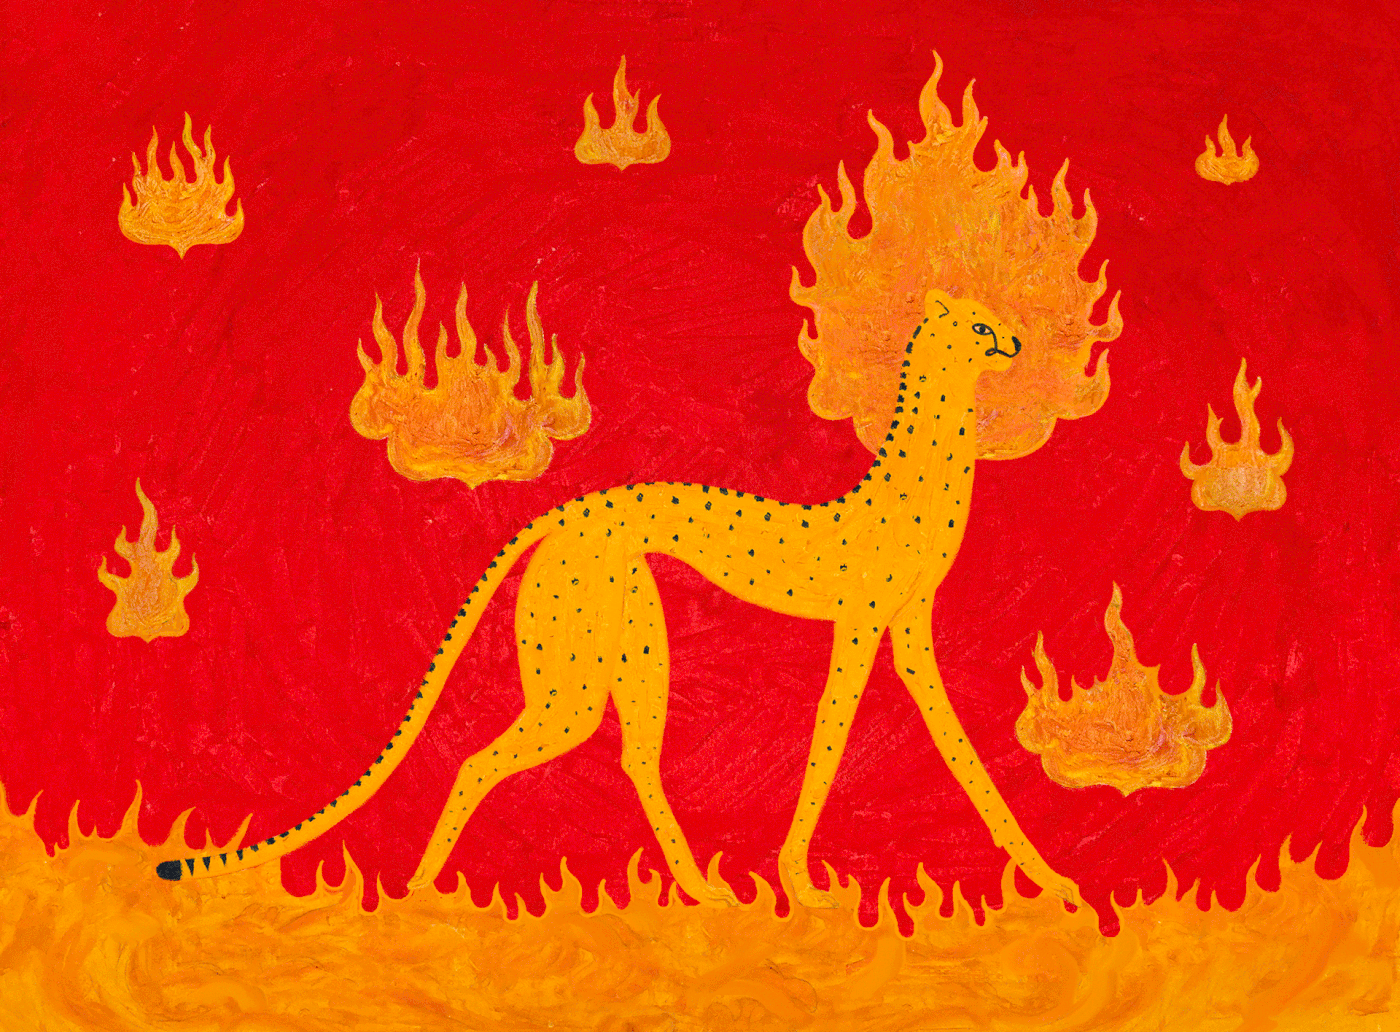 Animated illustration of a cheetah.